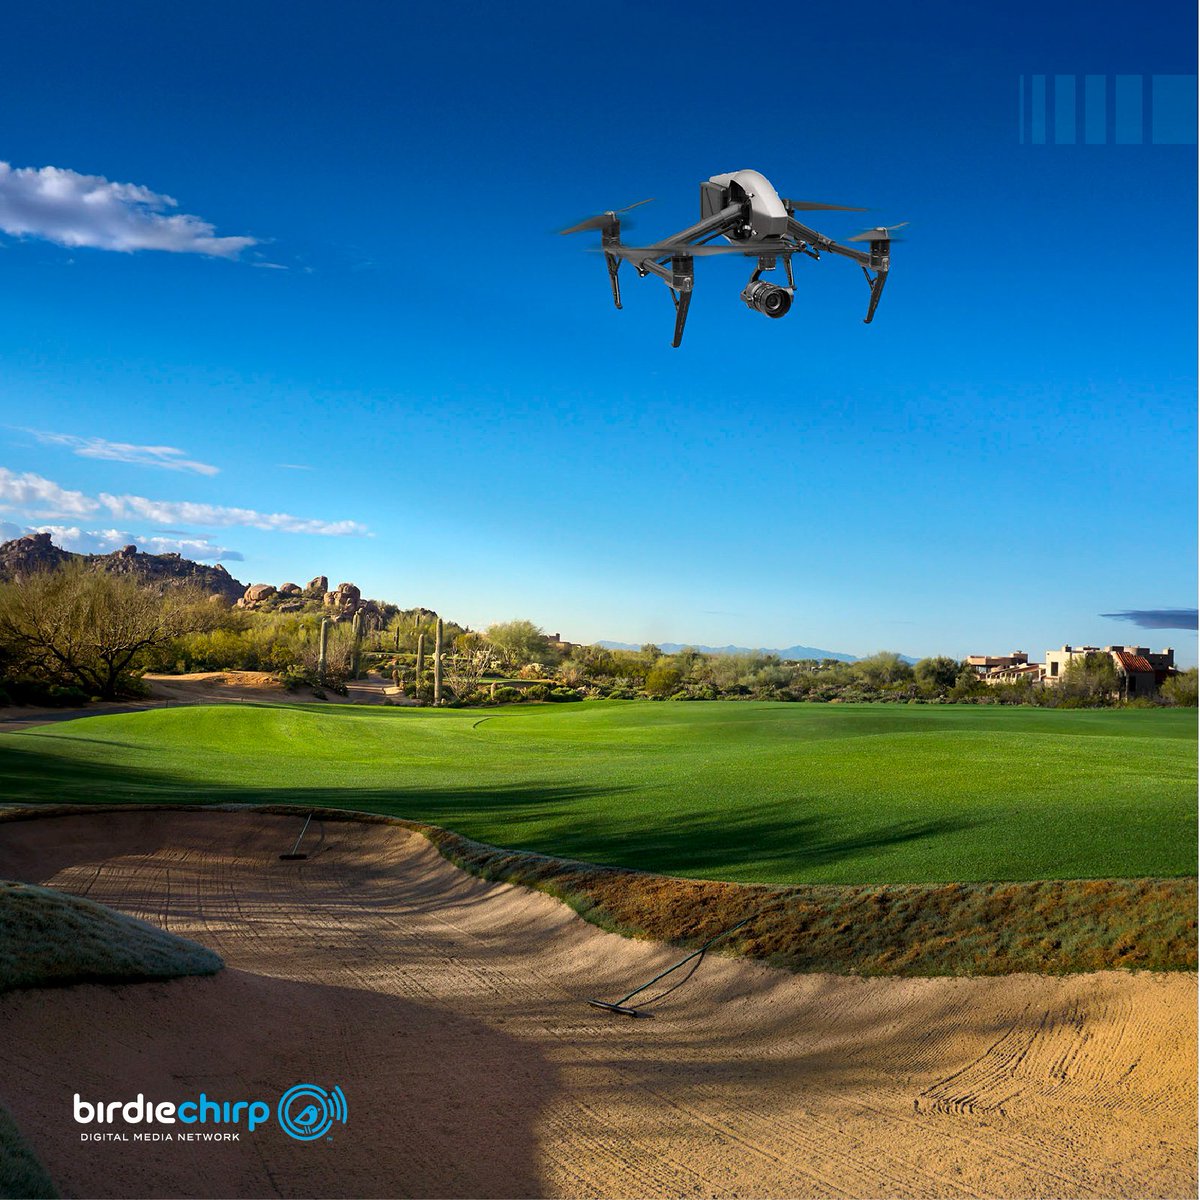 Golf Course's main asset should be captured! | #BirdieChirp #golfcoursemarketing #golfcourseadvertising #advertisingplatform #dronevideos #golfdrone #dronevideoadvertising